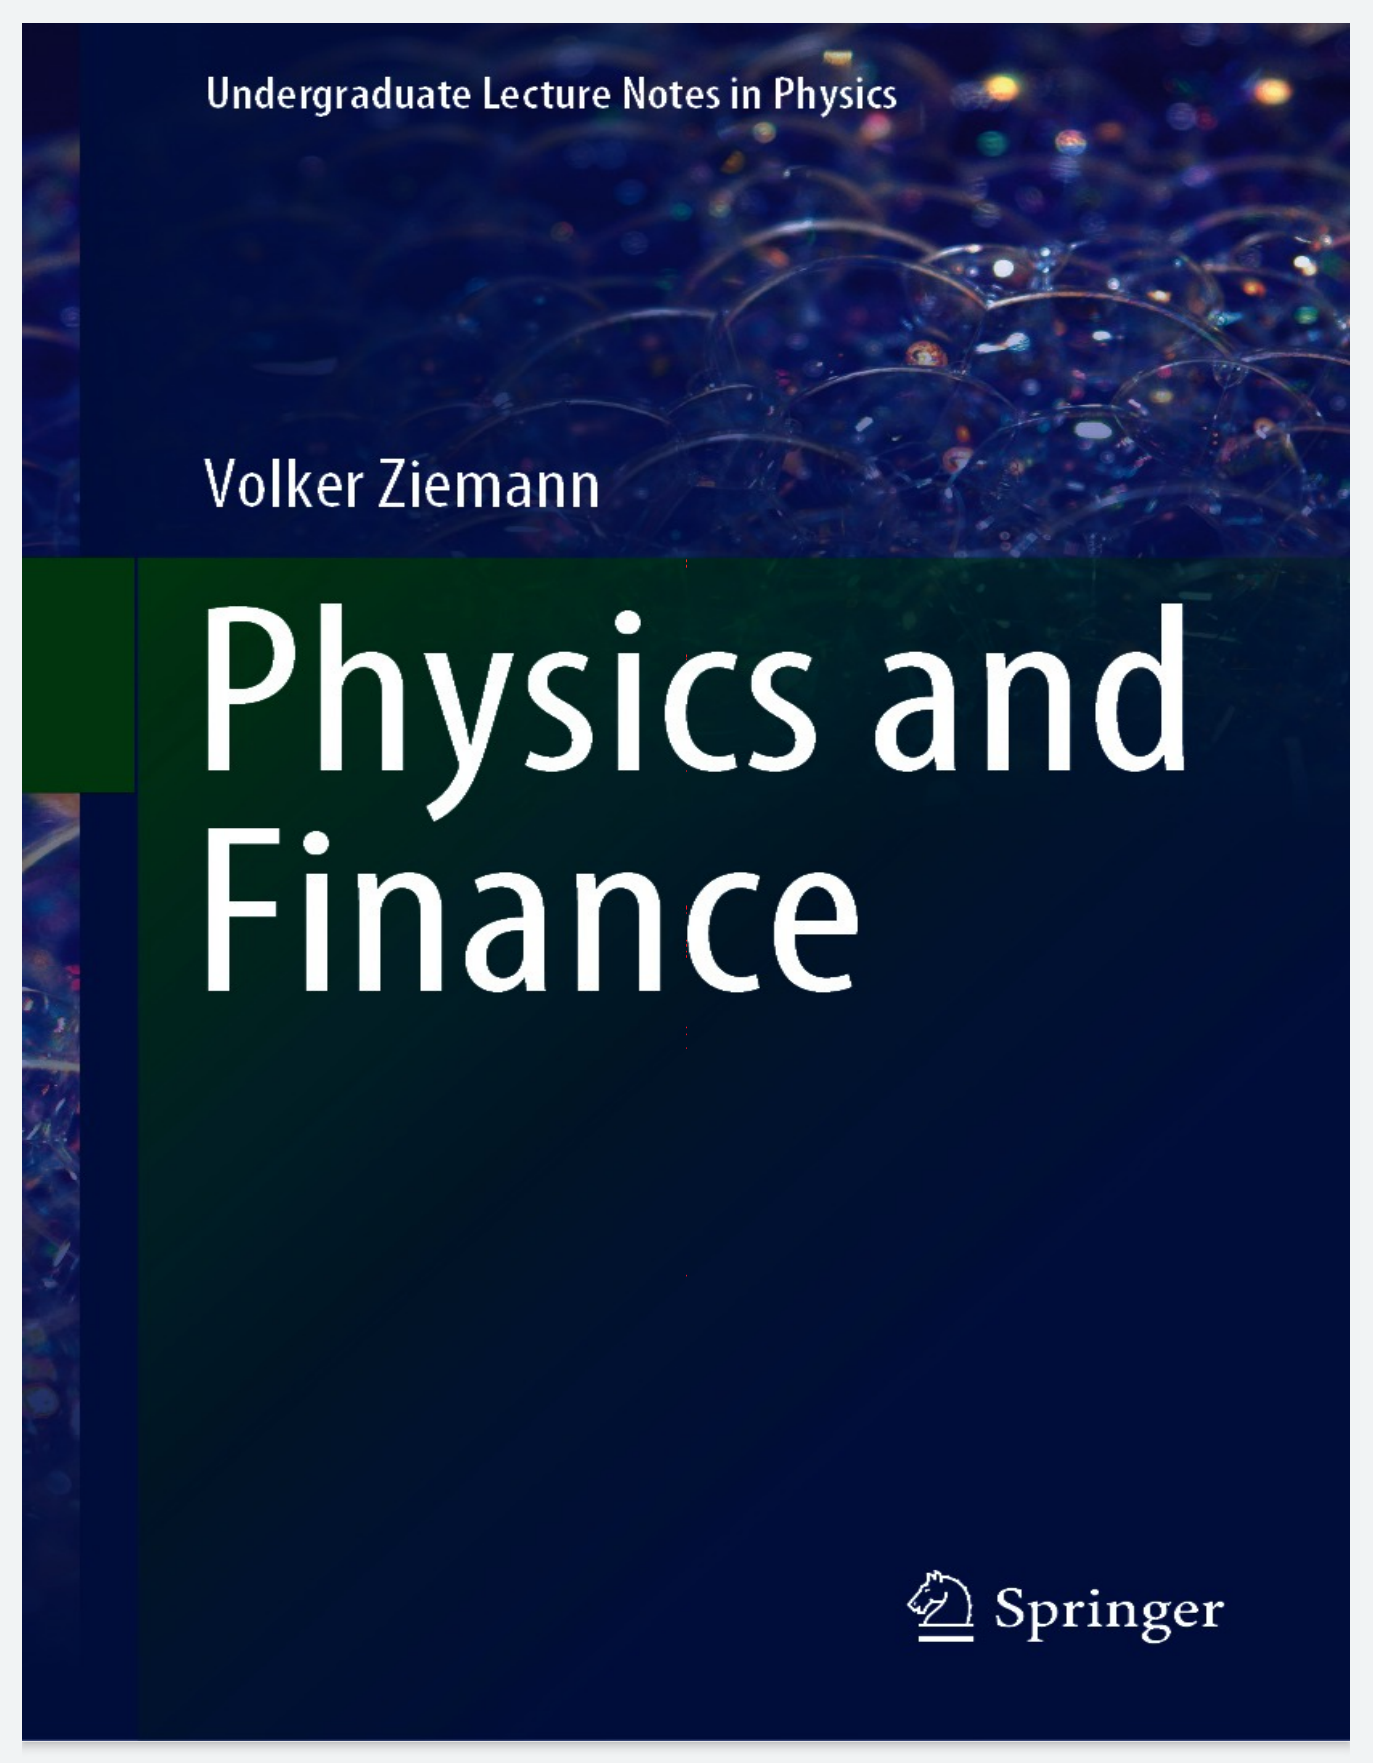 physics phd finance